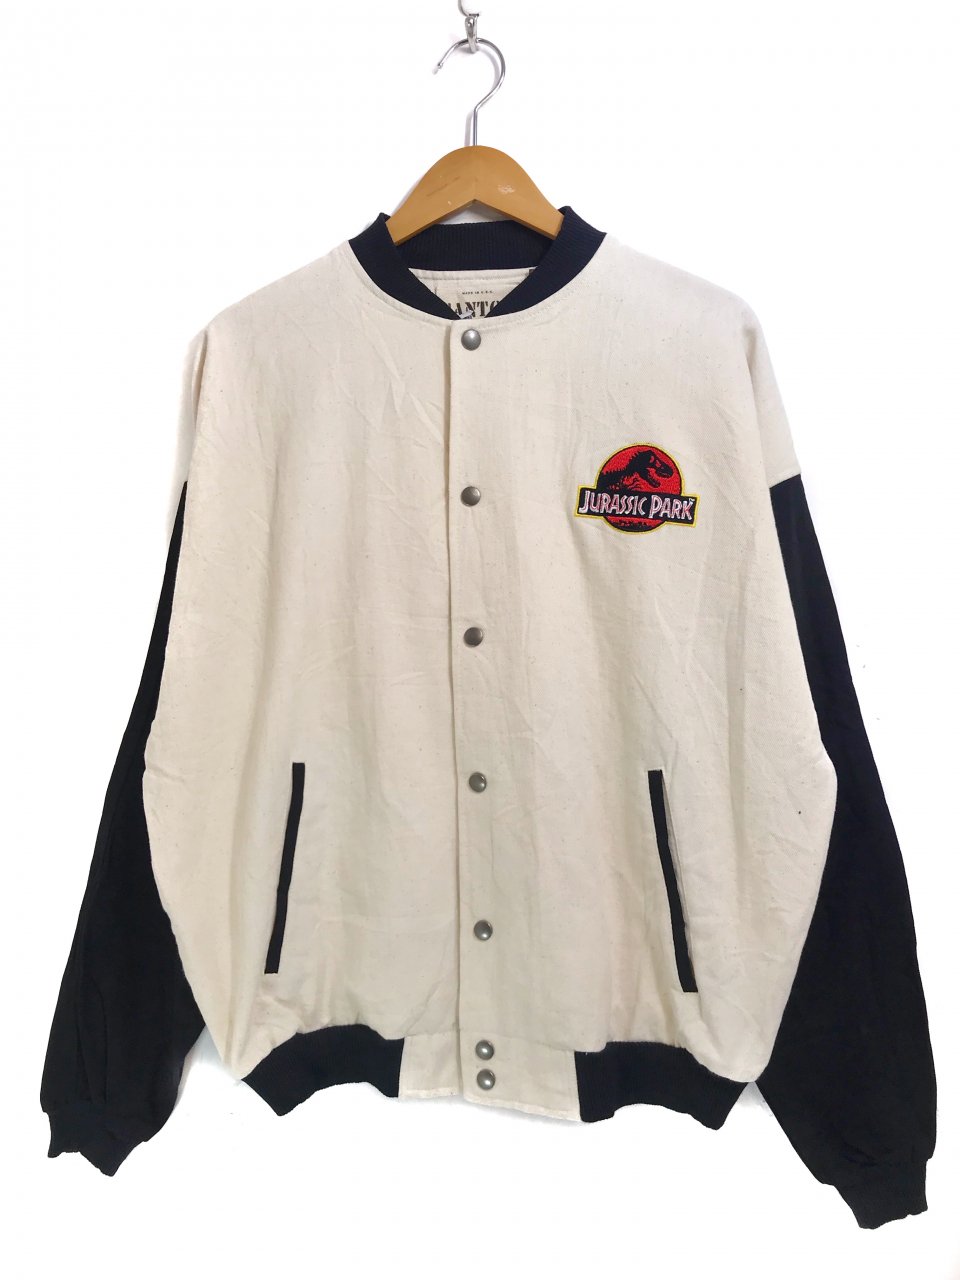 USA製 s JURASSIC PARK Cotton Varsity Jacket 生成り黒 L 年